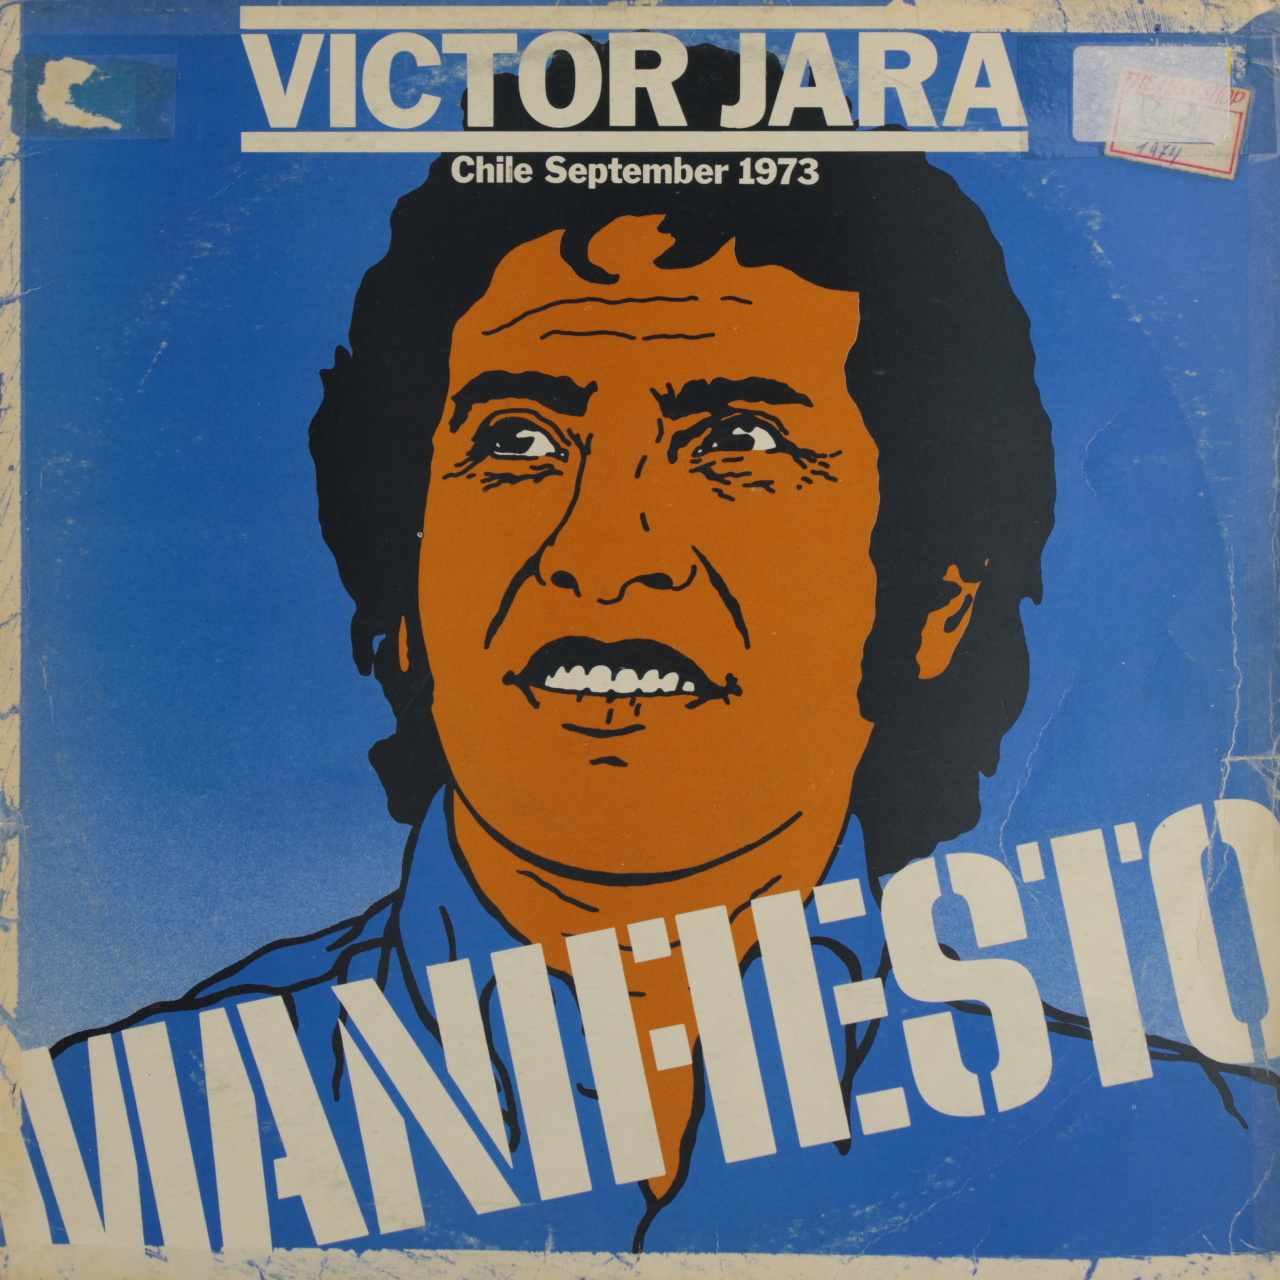 Manifiesto - Chile Spetember 1973